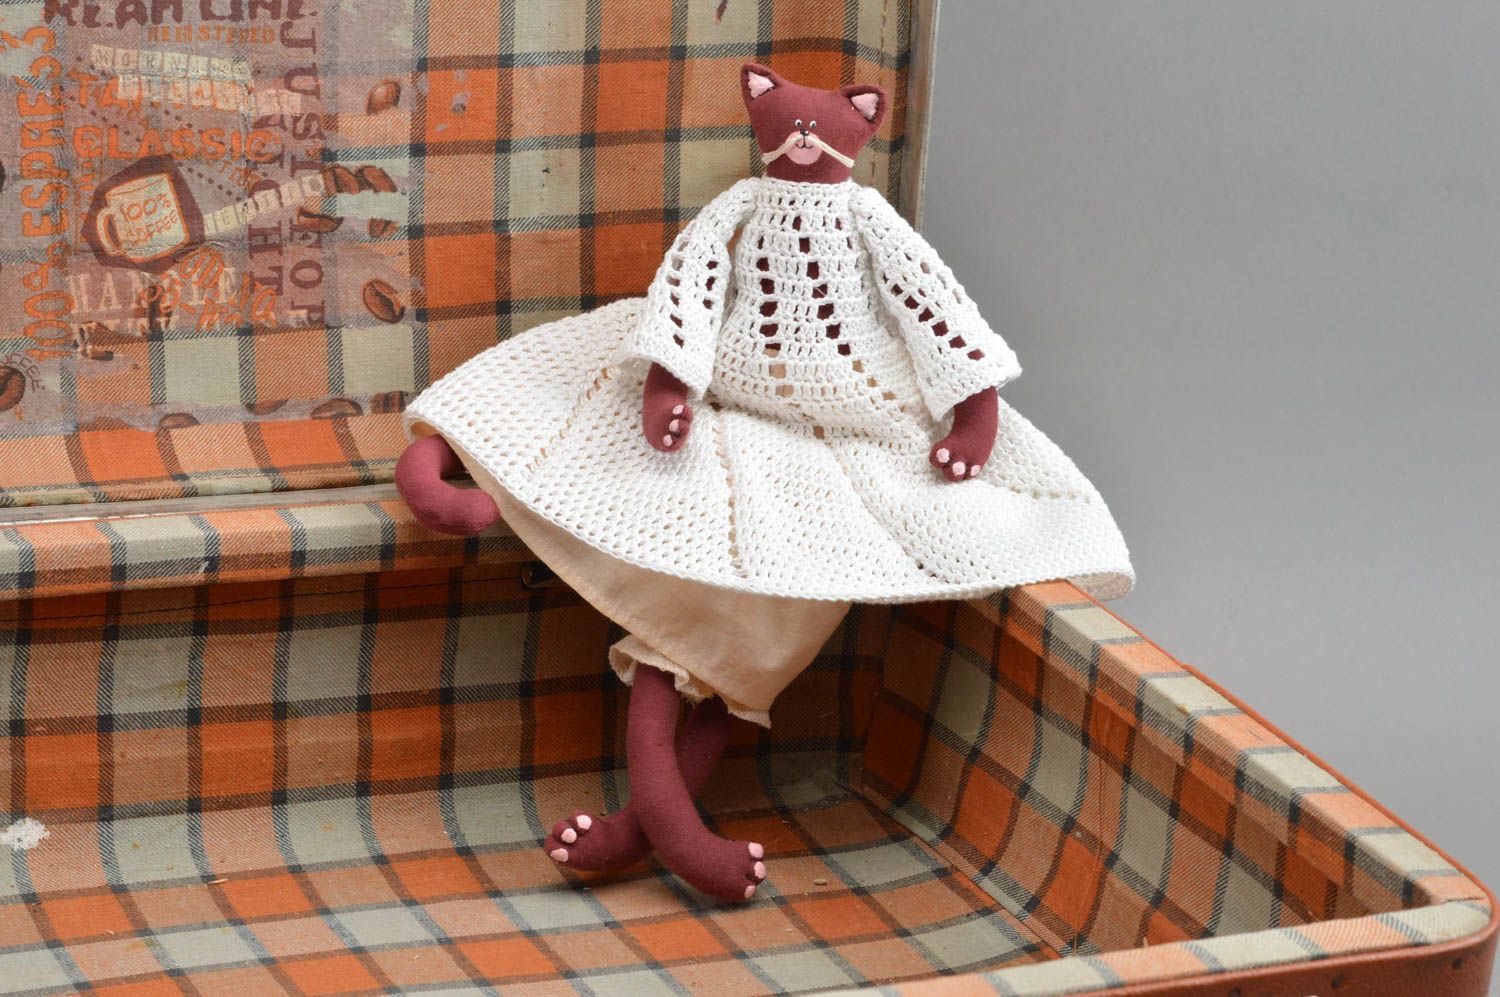 Fabric toy cat in dress designer stuffed toy handmade nursery decor ideas photo 1